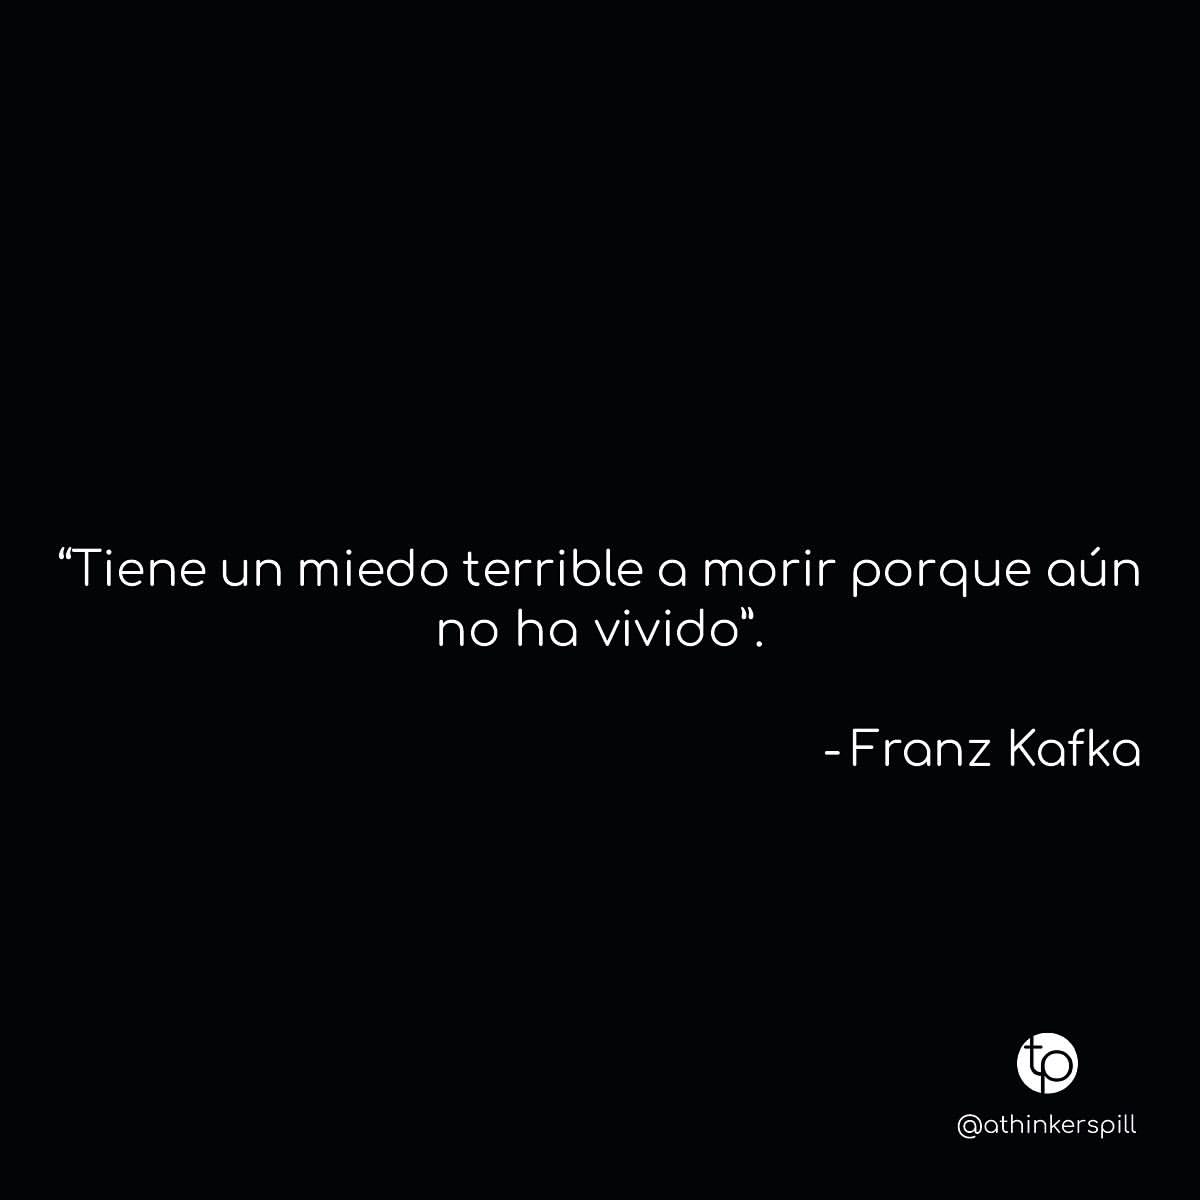 "Tiene un miedo terrible a morir porque aún no ha vivido". Franz Kafka.